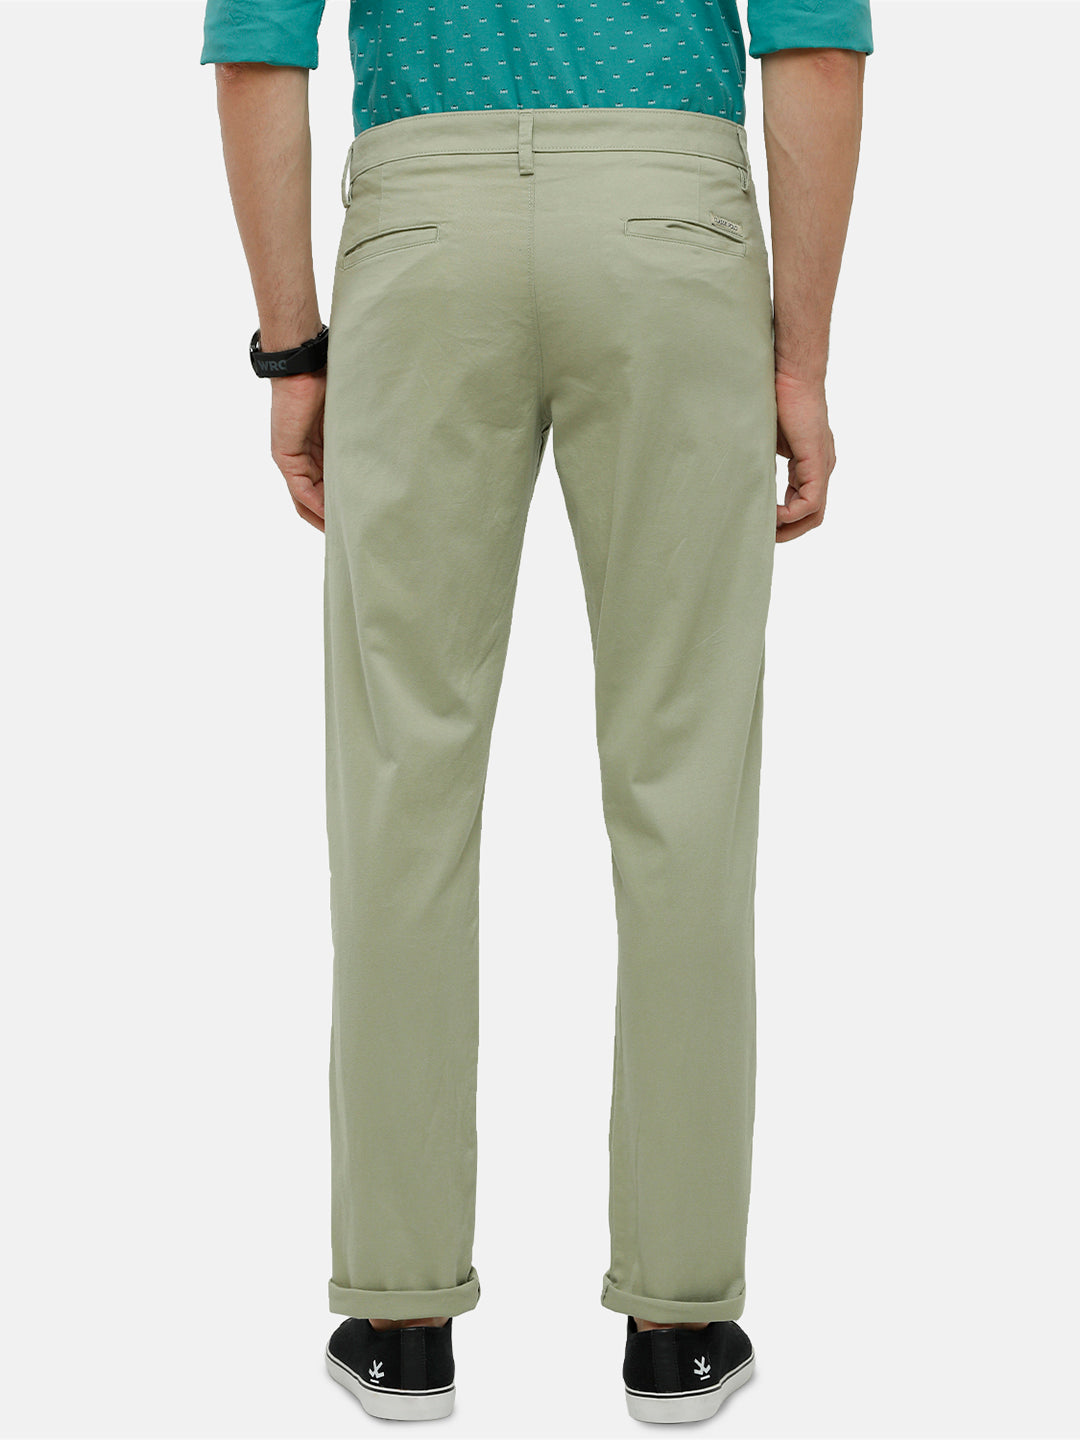 Kundan Men Poly-viscose Blended Olive Green Formal Trouser ( Pack Of 1  Trouser ) at Rs 447 | Suit trousers, Business slacks, Formal slacks, Chinos  Set, Men Khaki Set - Blog Spud, Tiruppur | ID: 2850429412091